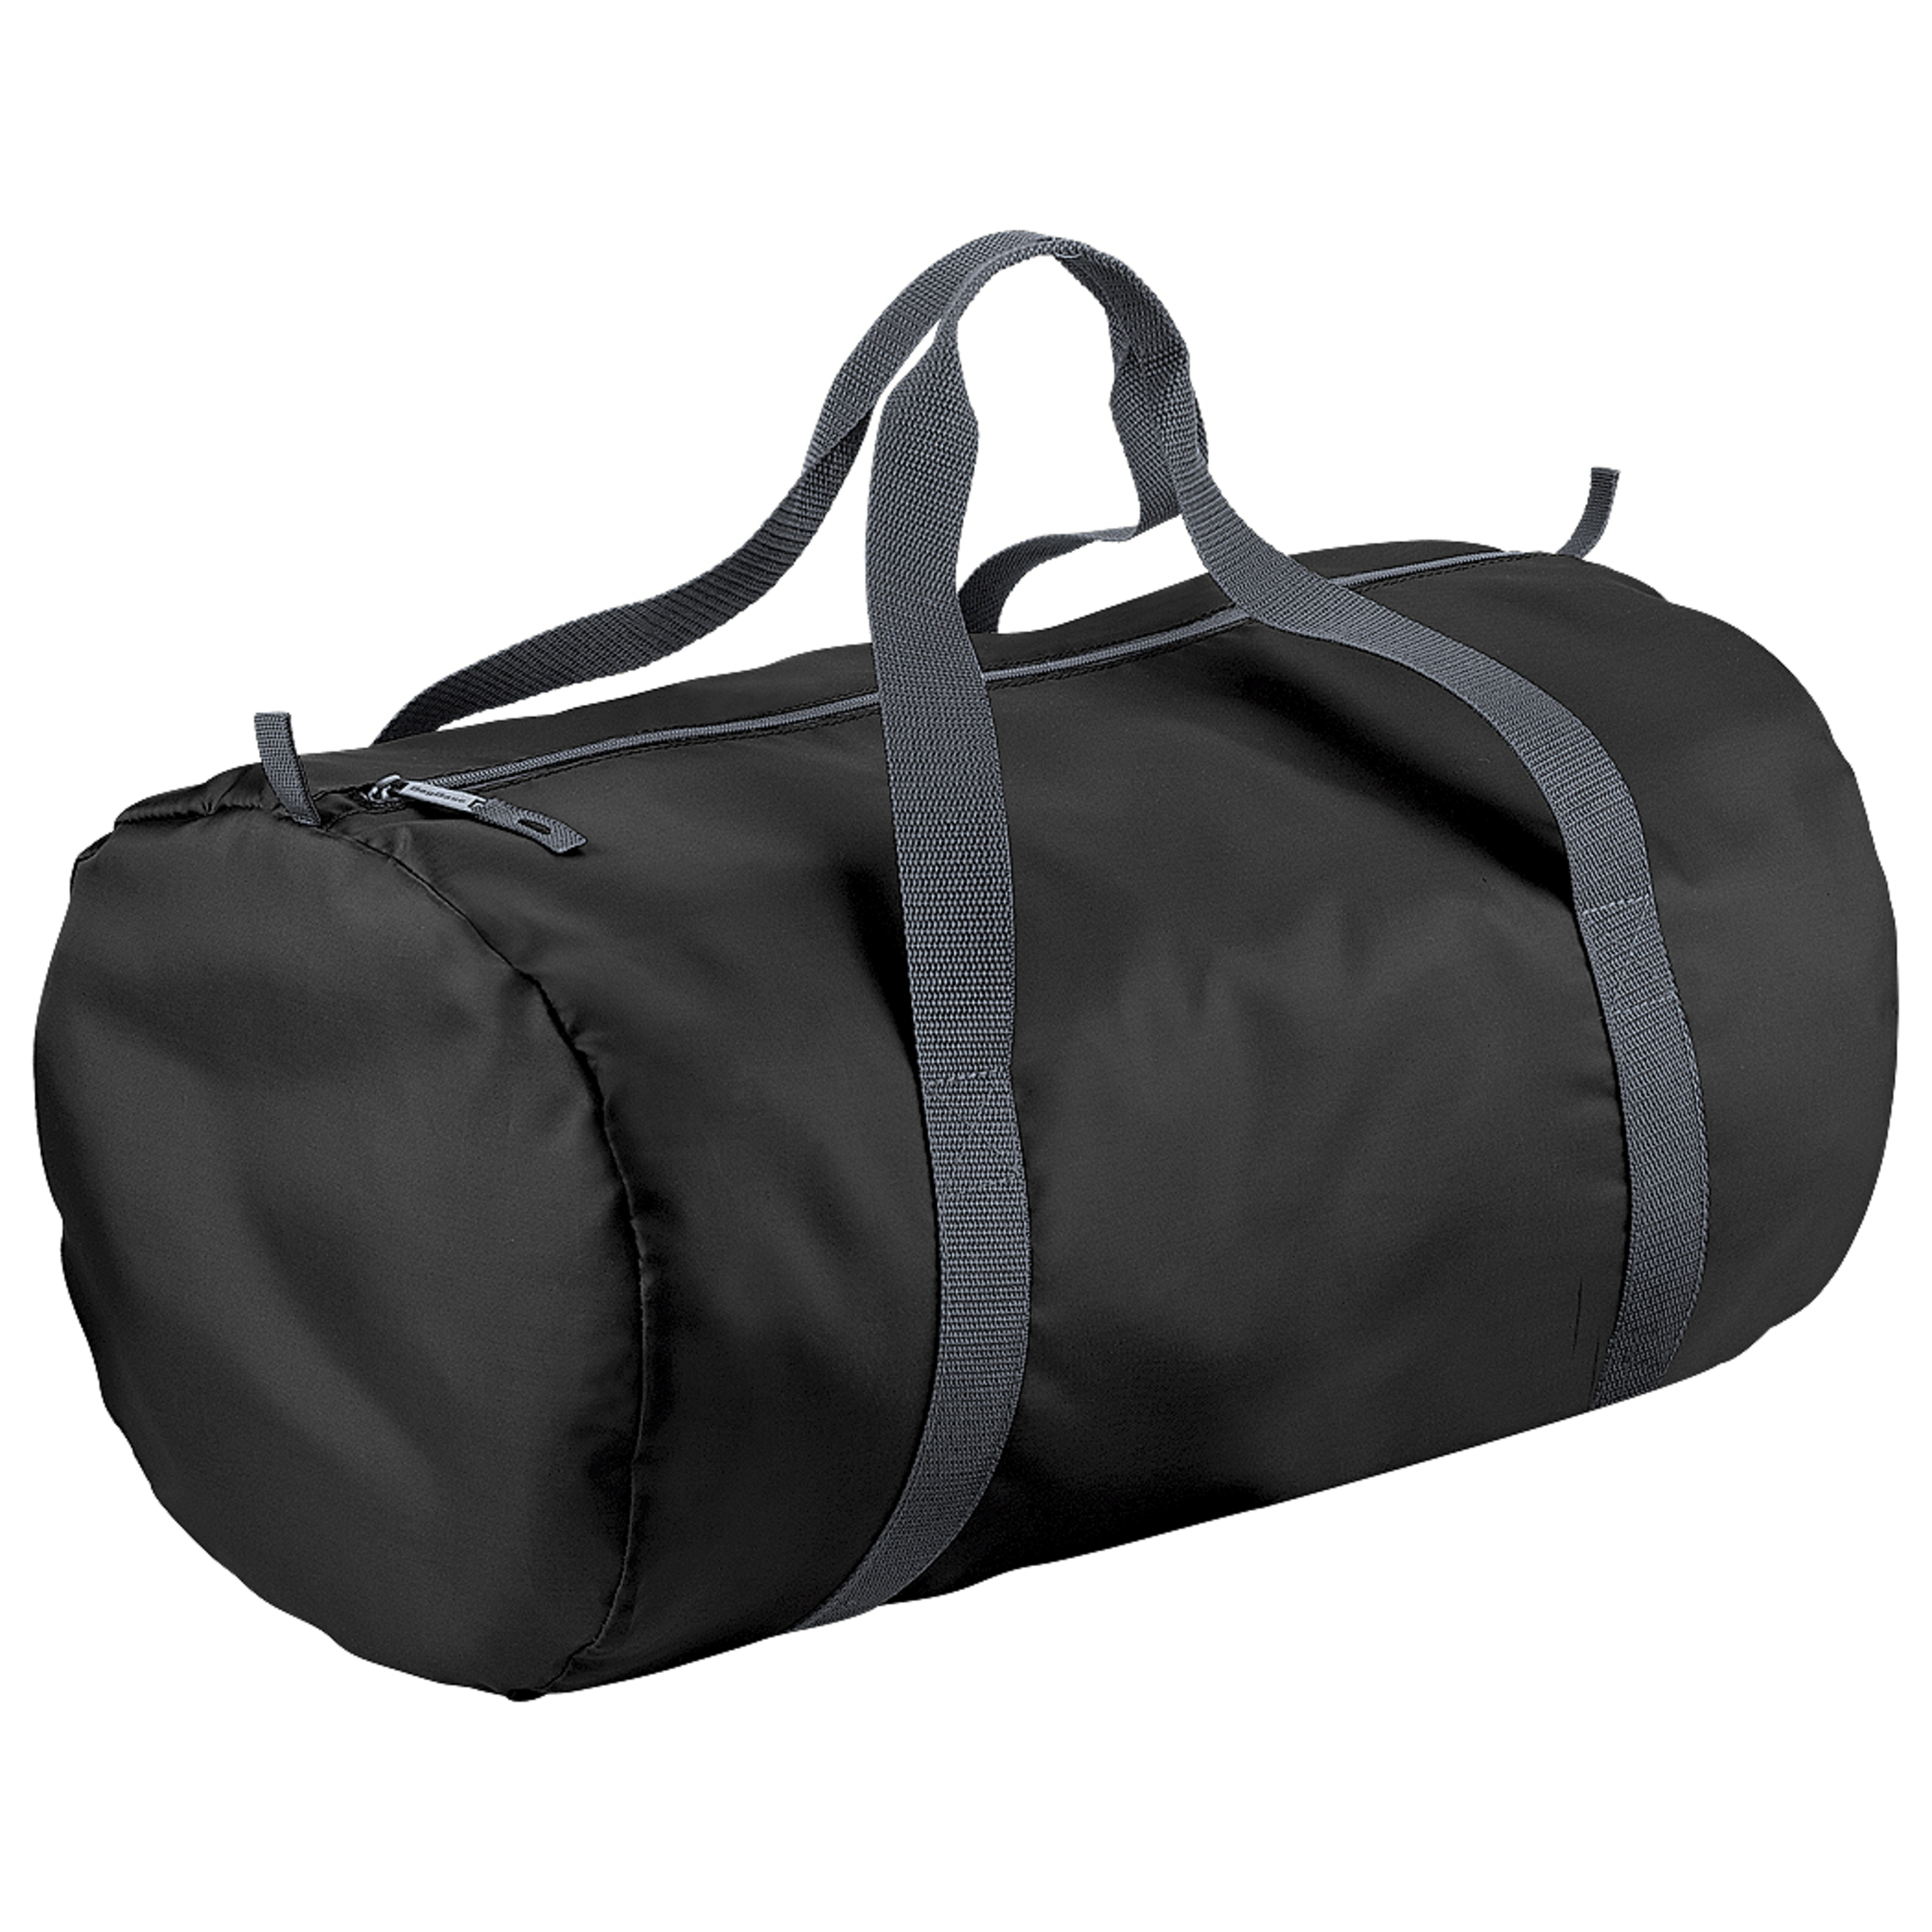 Bolsa De Deporte / De Viaje Impermeable Modelo Barrel Packaway (32 Litros) Bagbase (Negro)